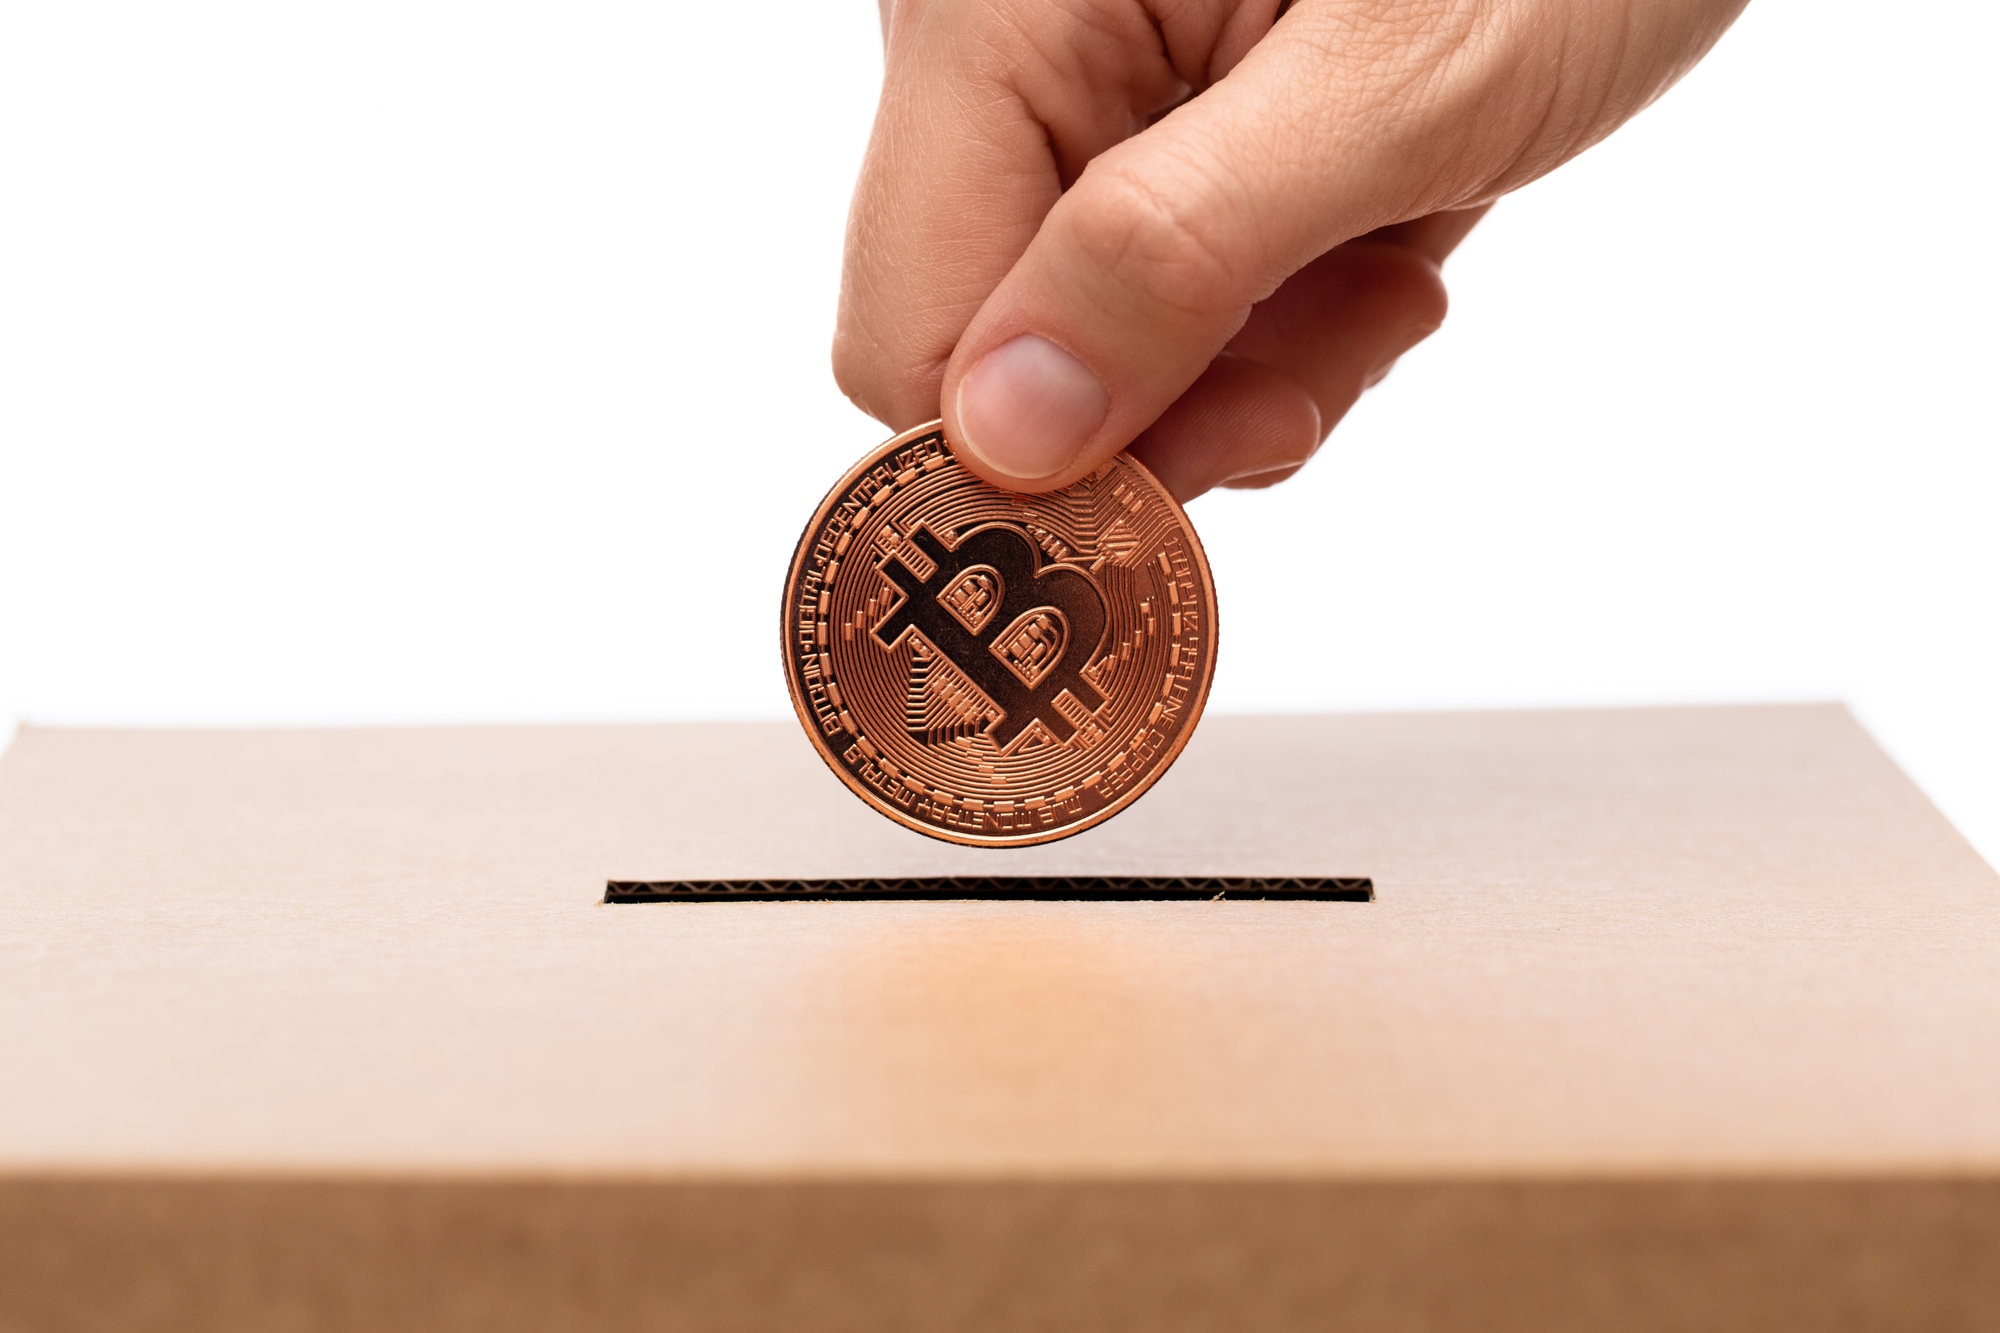 Hand putting Bitcoin into charity donation box